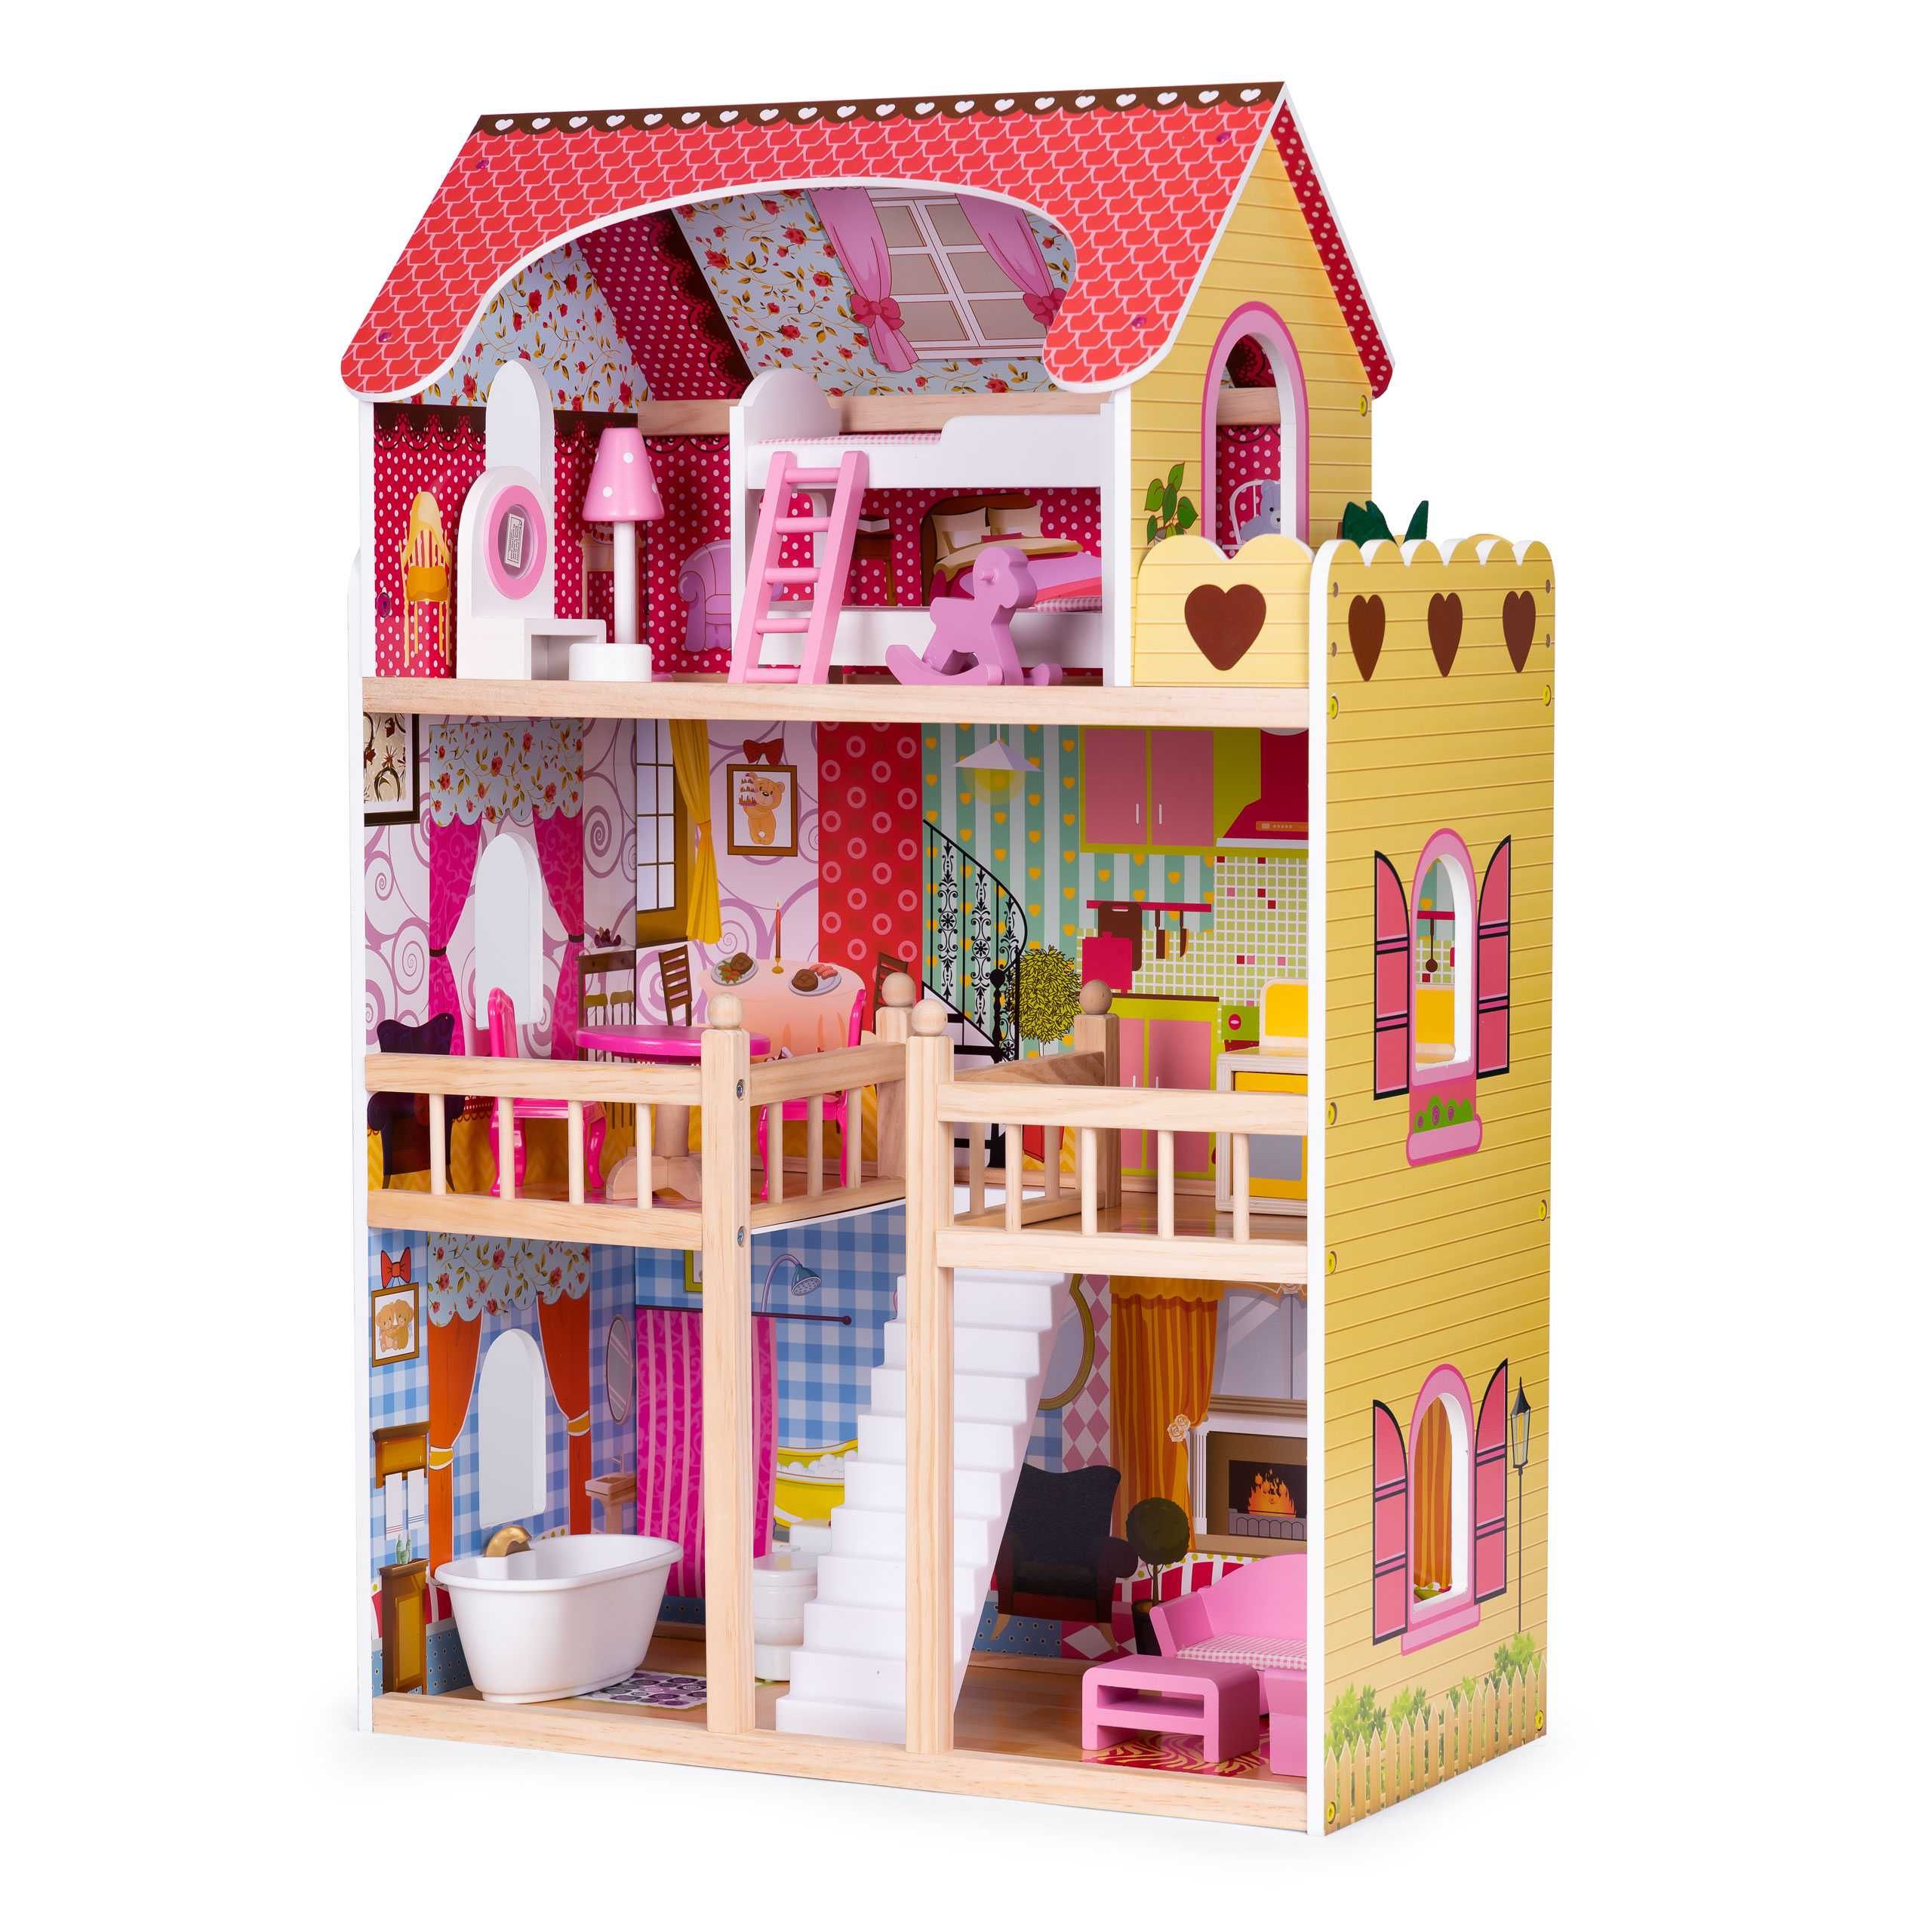 Drewniany domek dla lalek mebelki 3 piętra ECOTOYS #  8209 (4109)